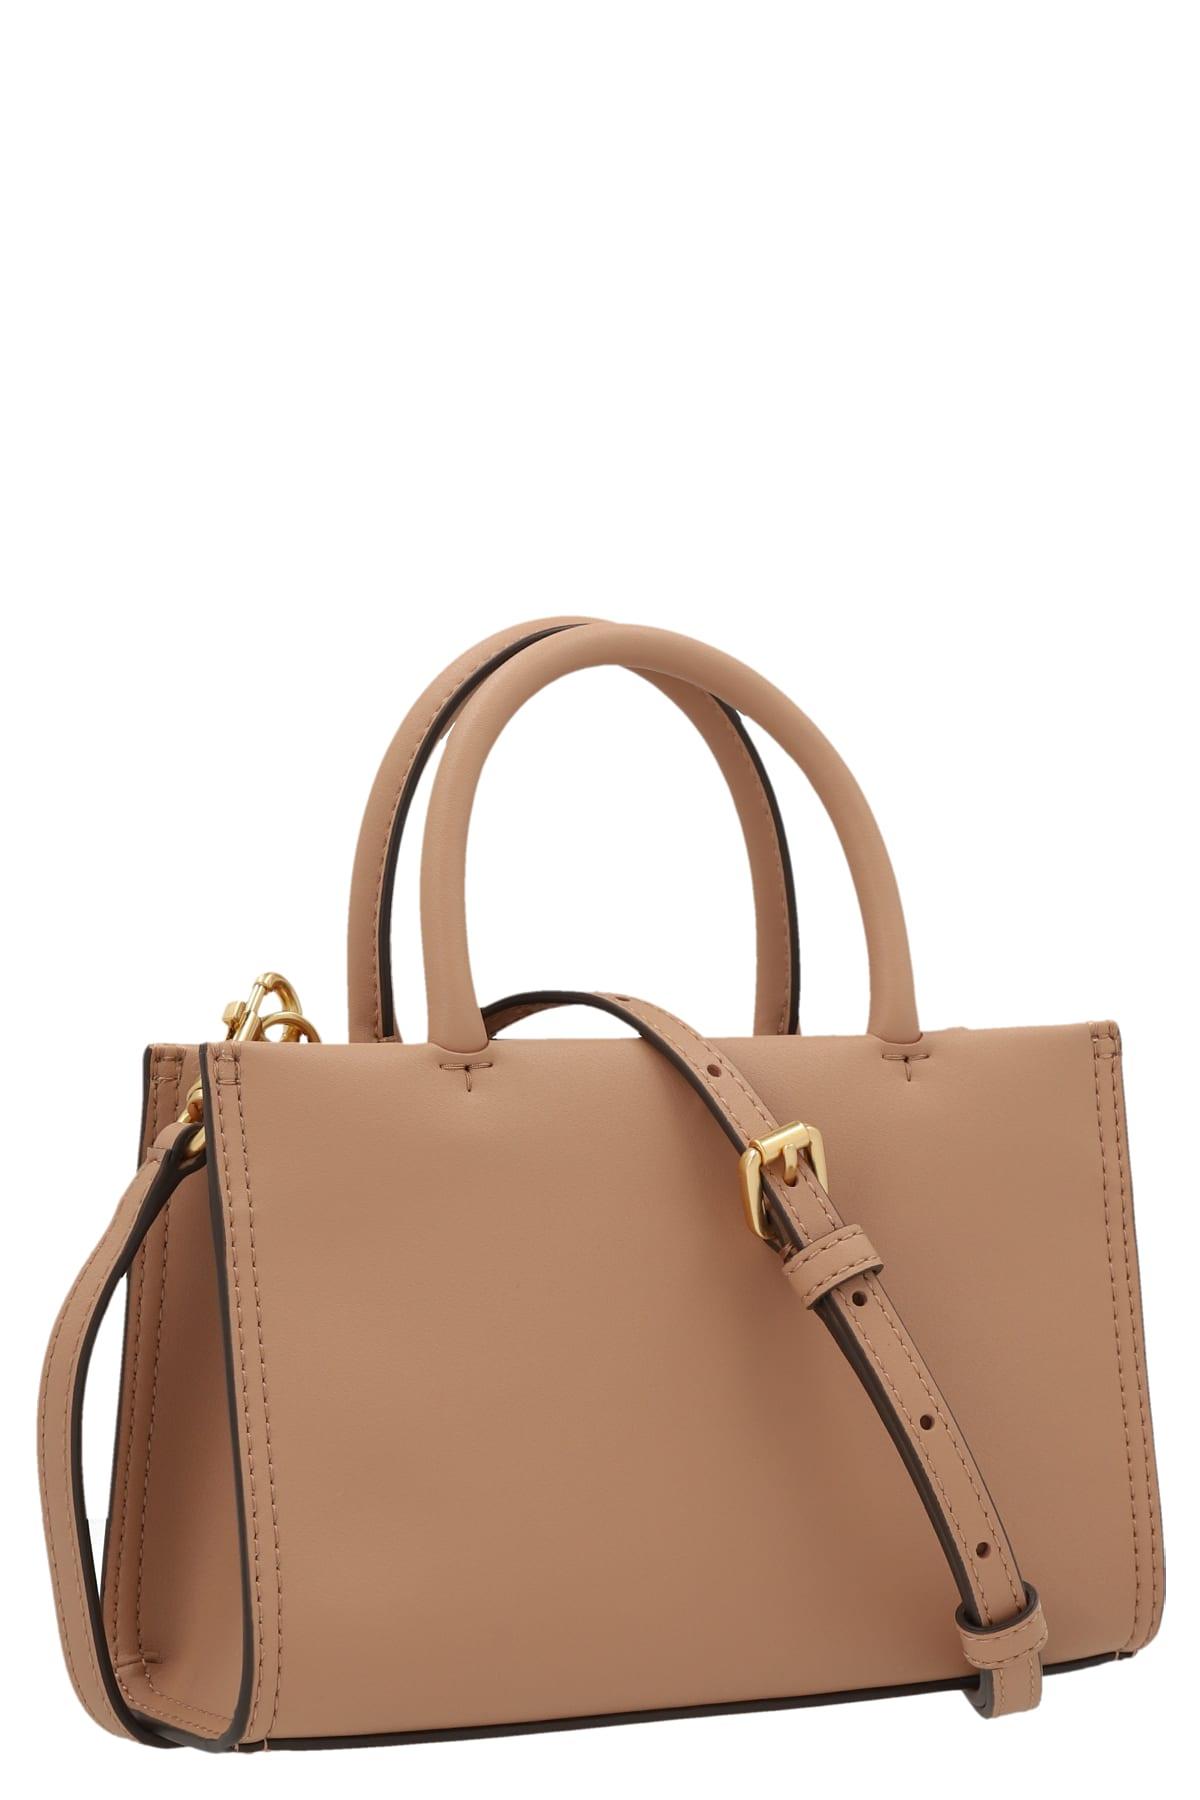 Tory Burch 'eco Ella Mini' Handbag in Brown | Lyst